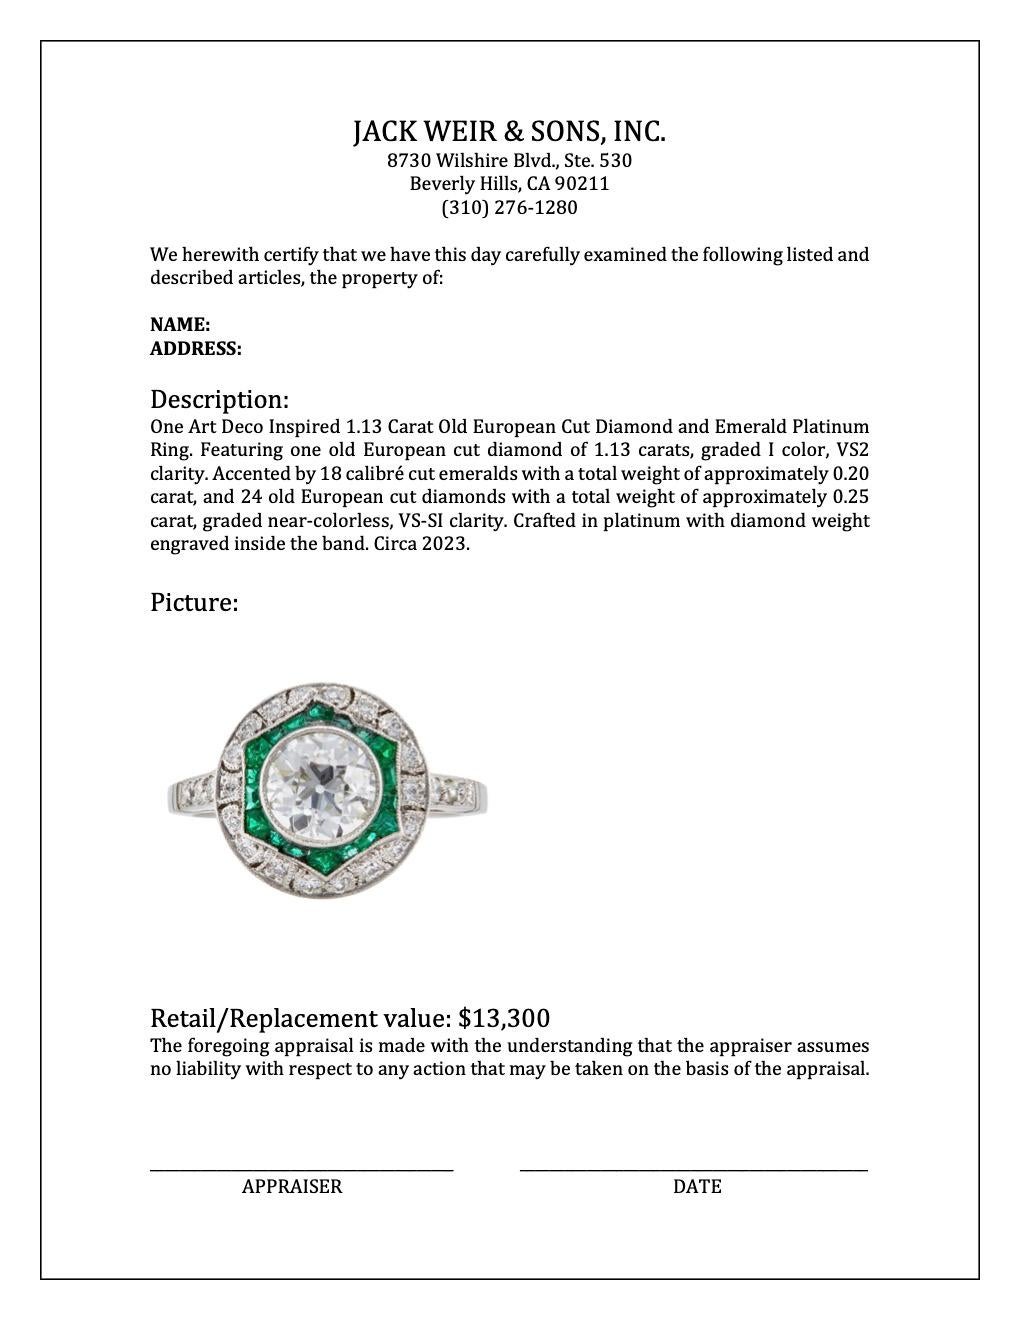 Art Deco Inspired 1.13 Carat Old European Cut Diamond and Emerald Platinum Ring 2